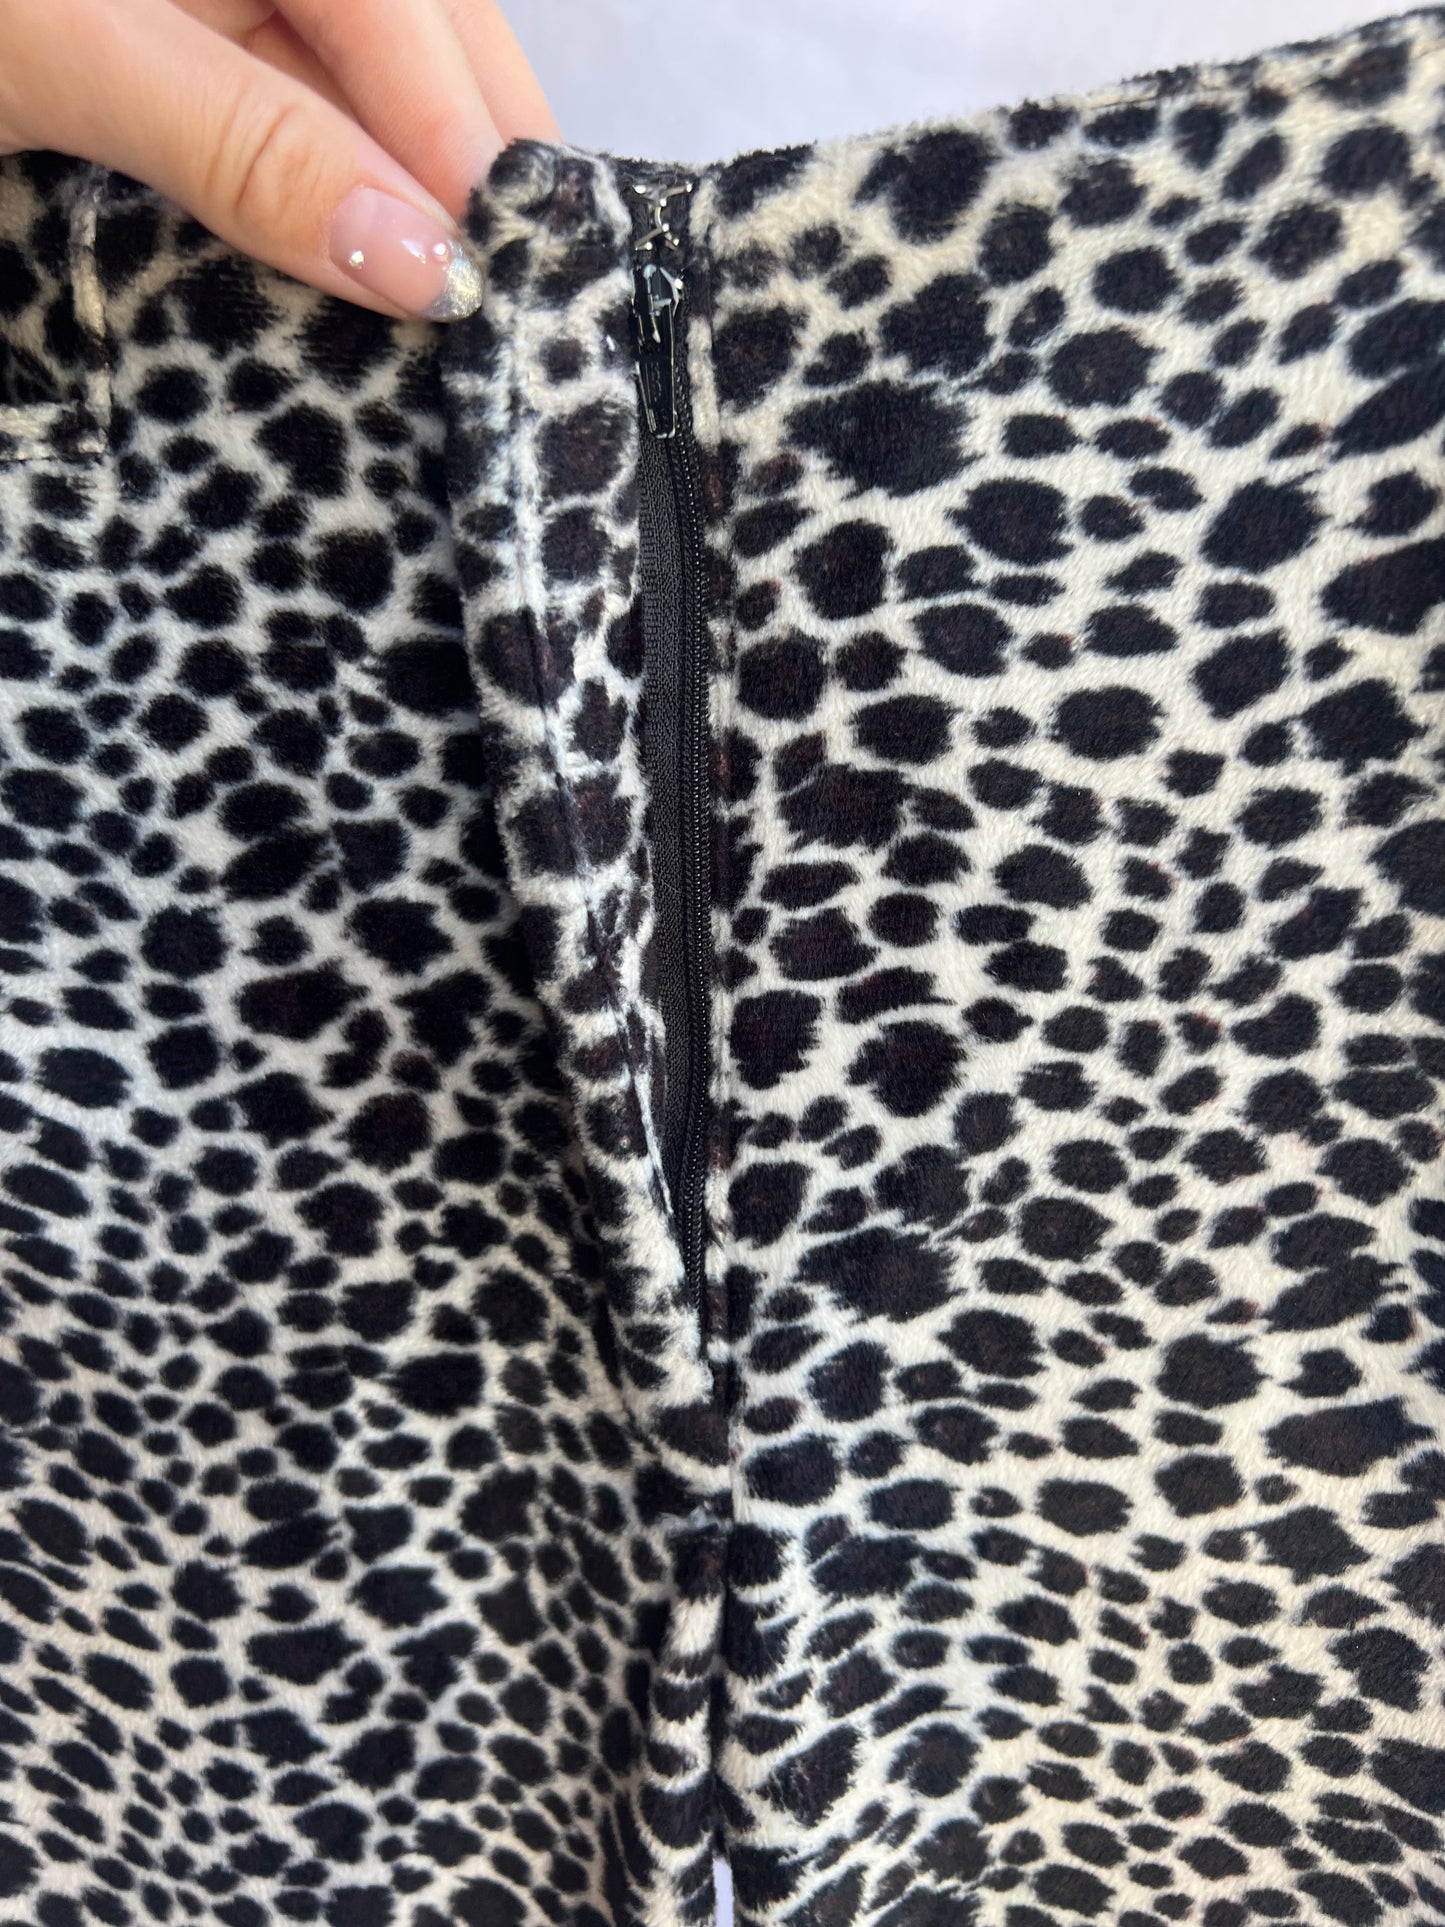 Cheetah Print Furry Pants - 27"